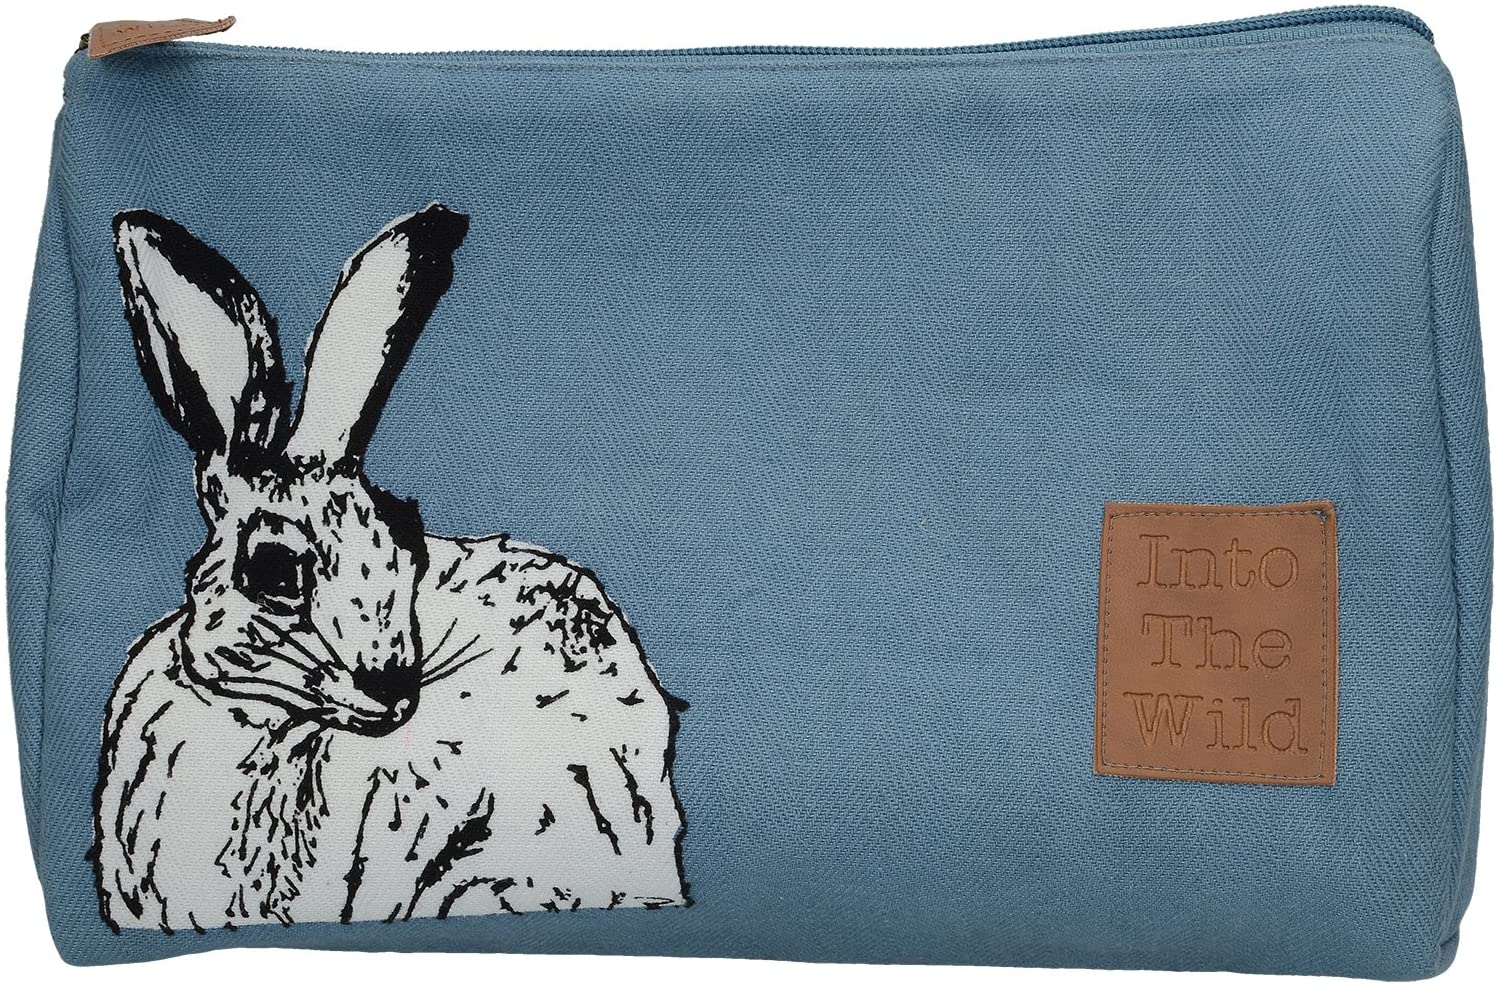 Creative Tops in Wild Rabbit Medium Cosmetic Fabric, Blue, 1 x 26 x 17 cm